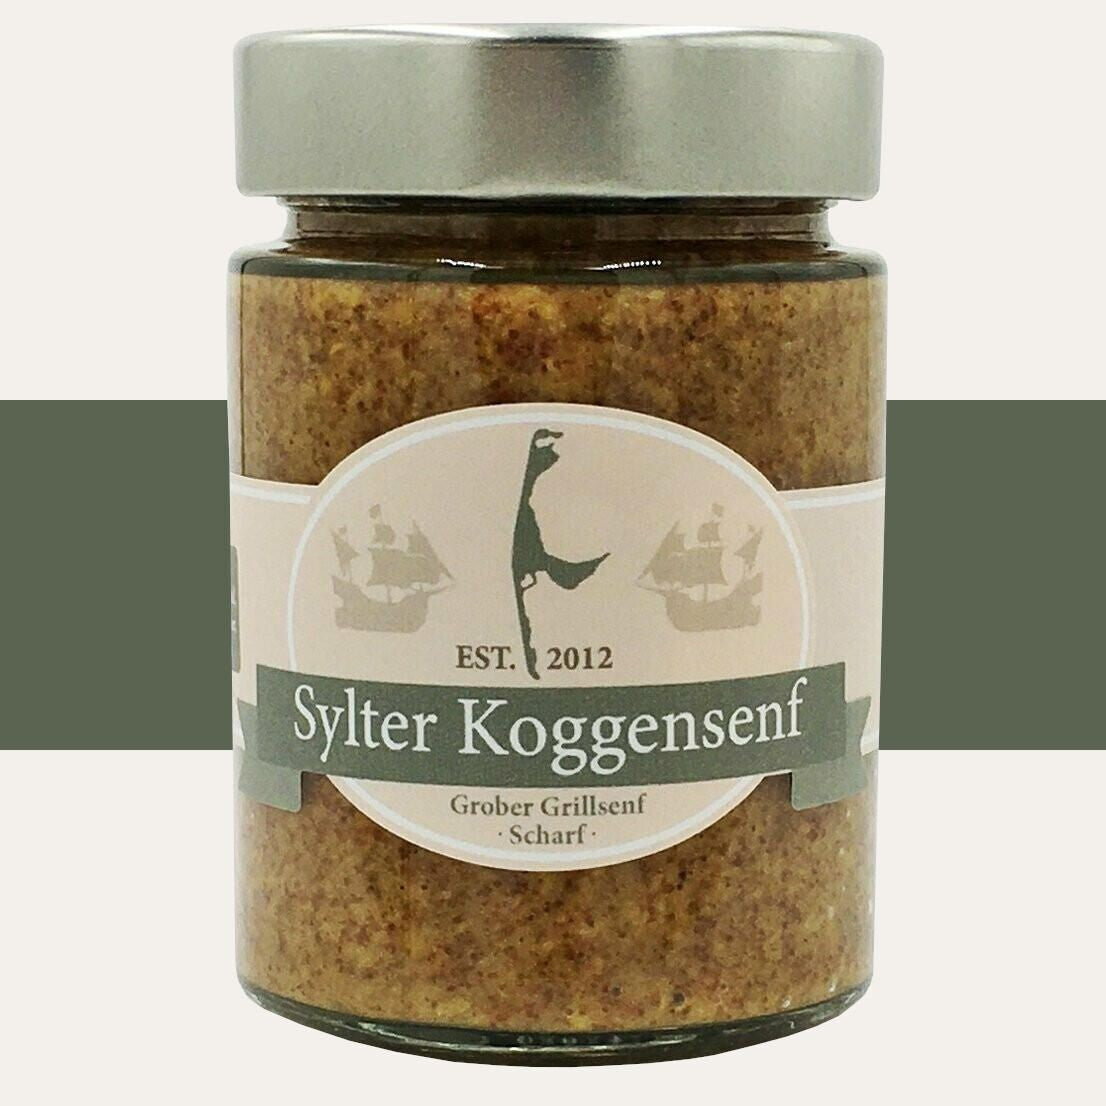 Sylter Koggensenf - Grober Grillsenf Scharf